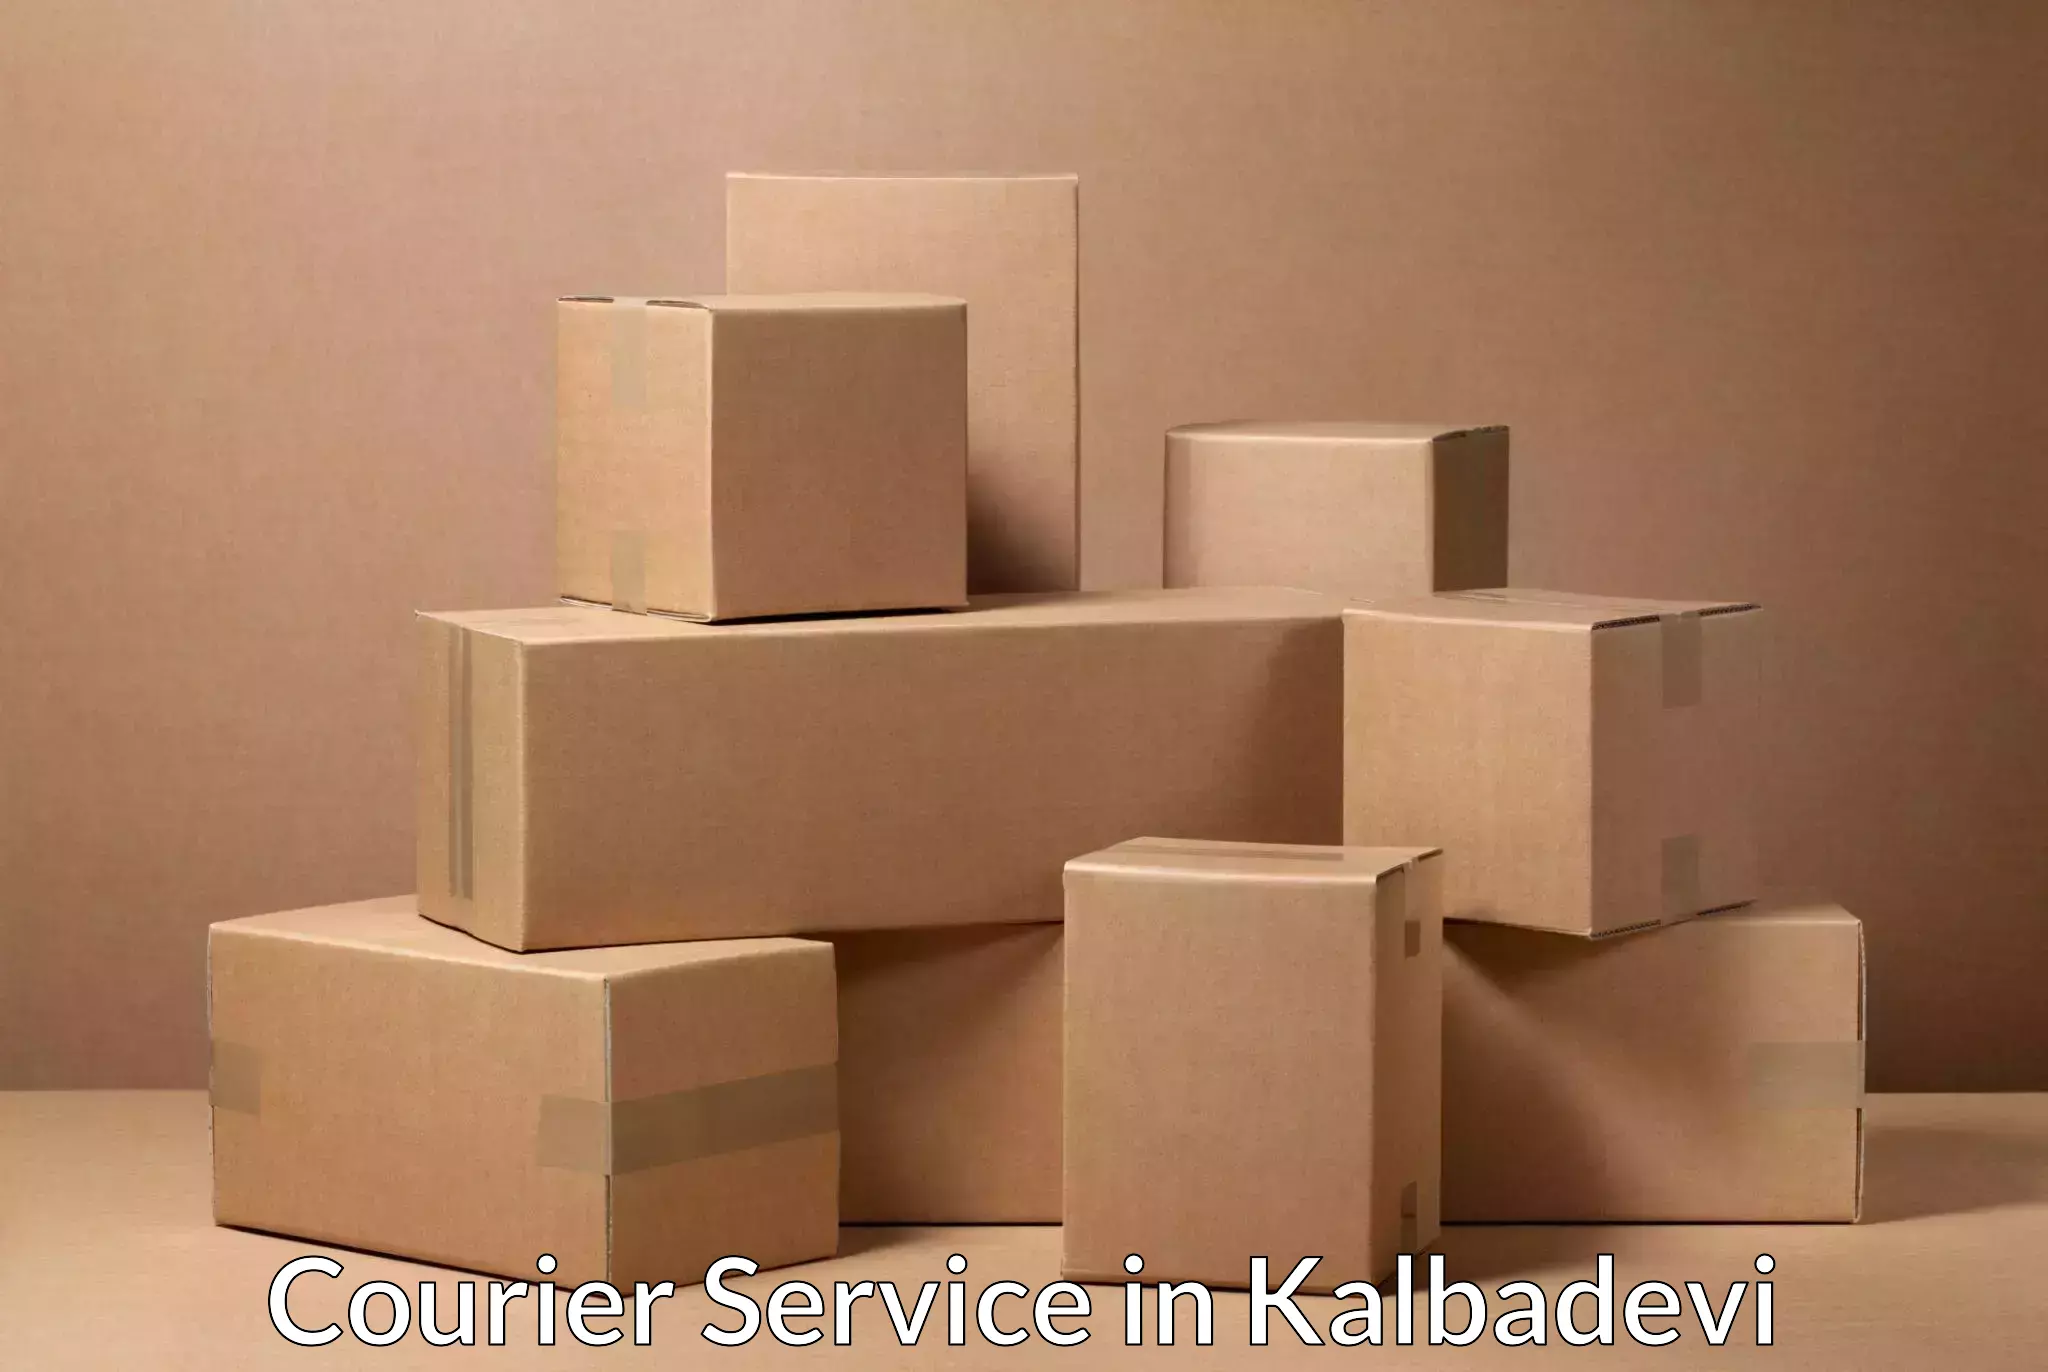 Affordable parcel service in Kalbadevi